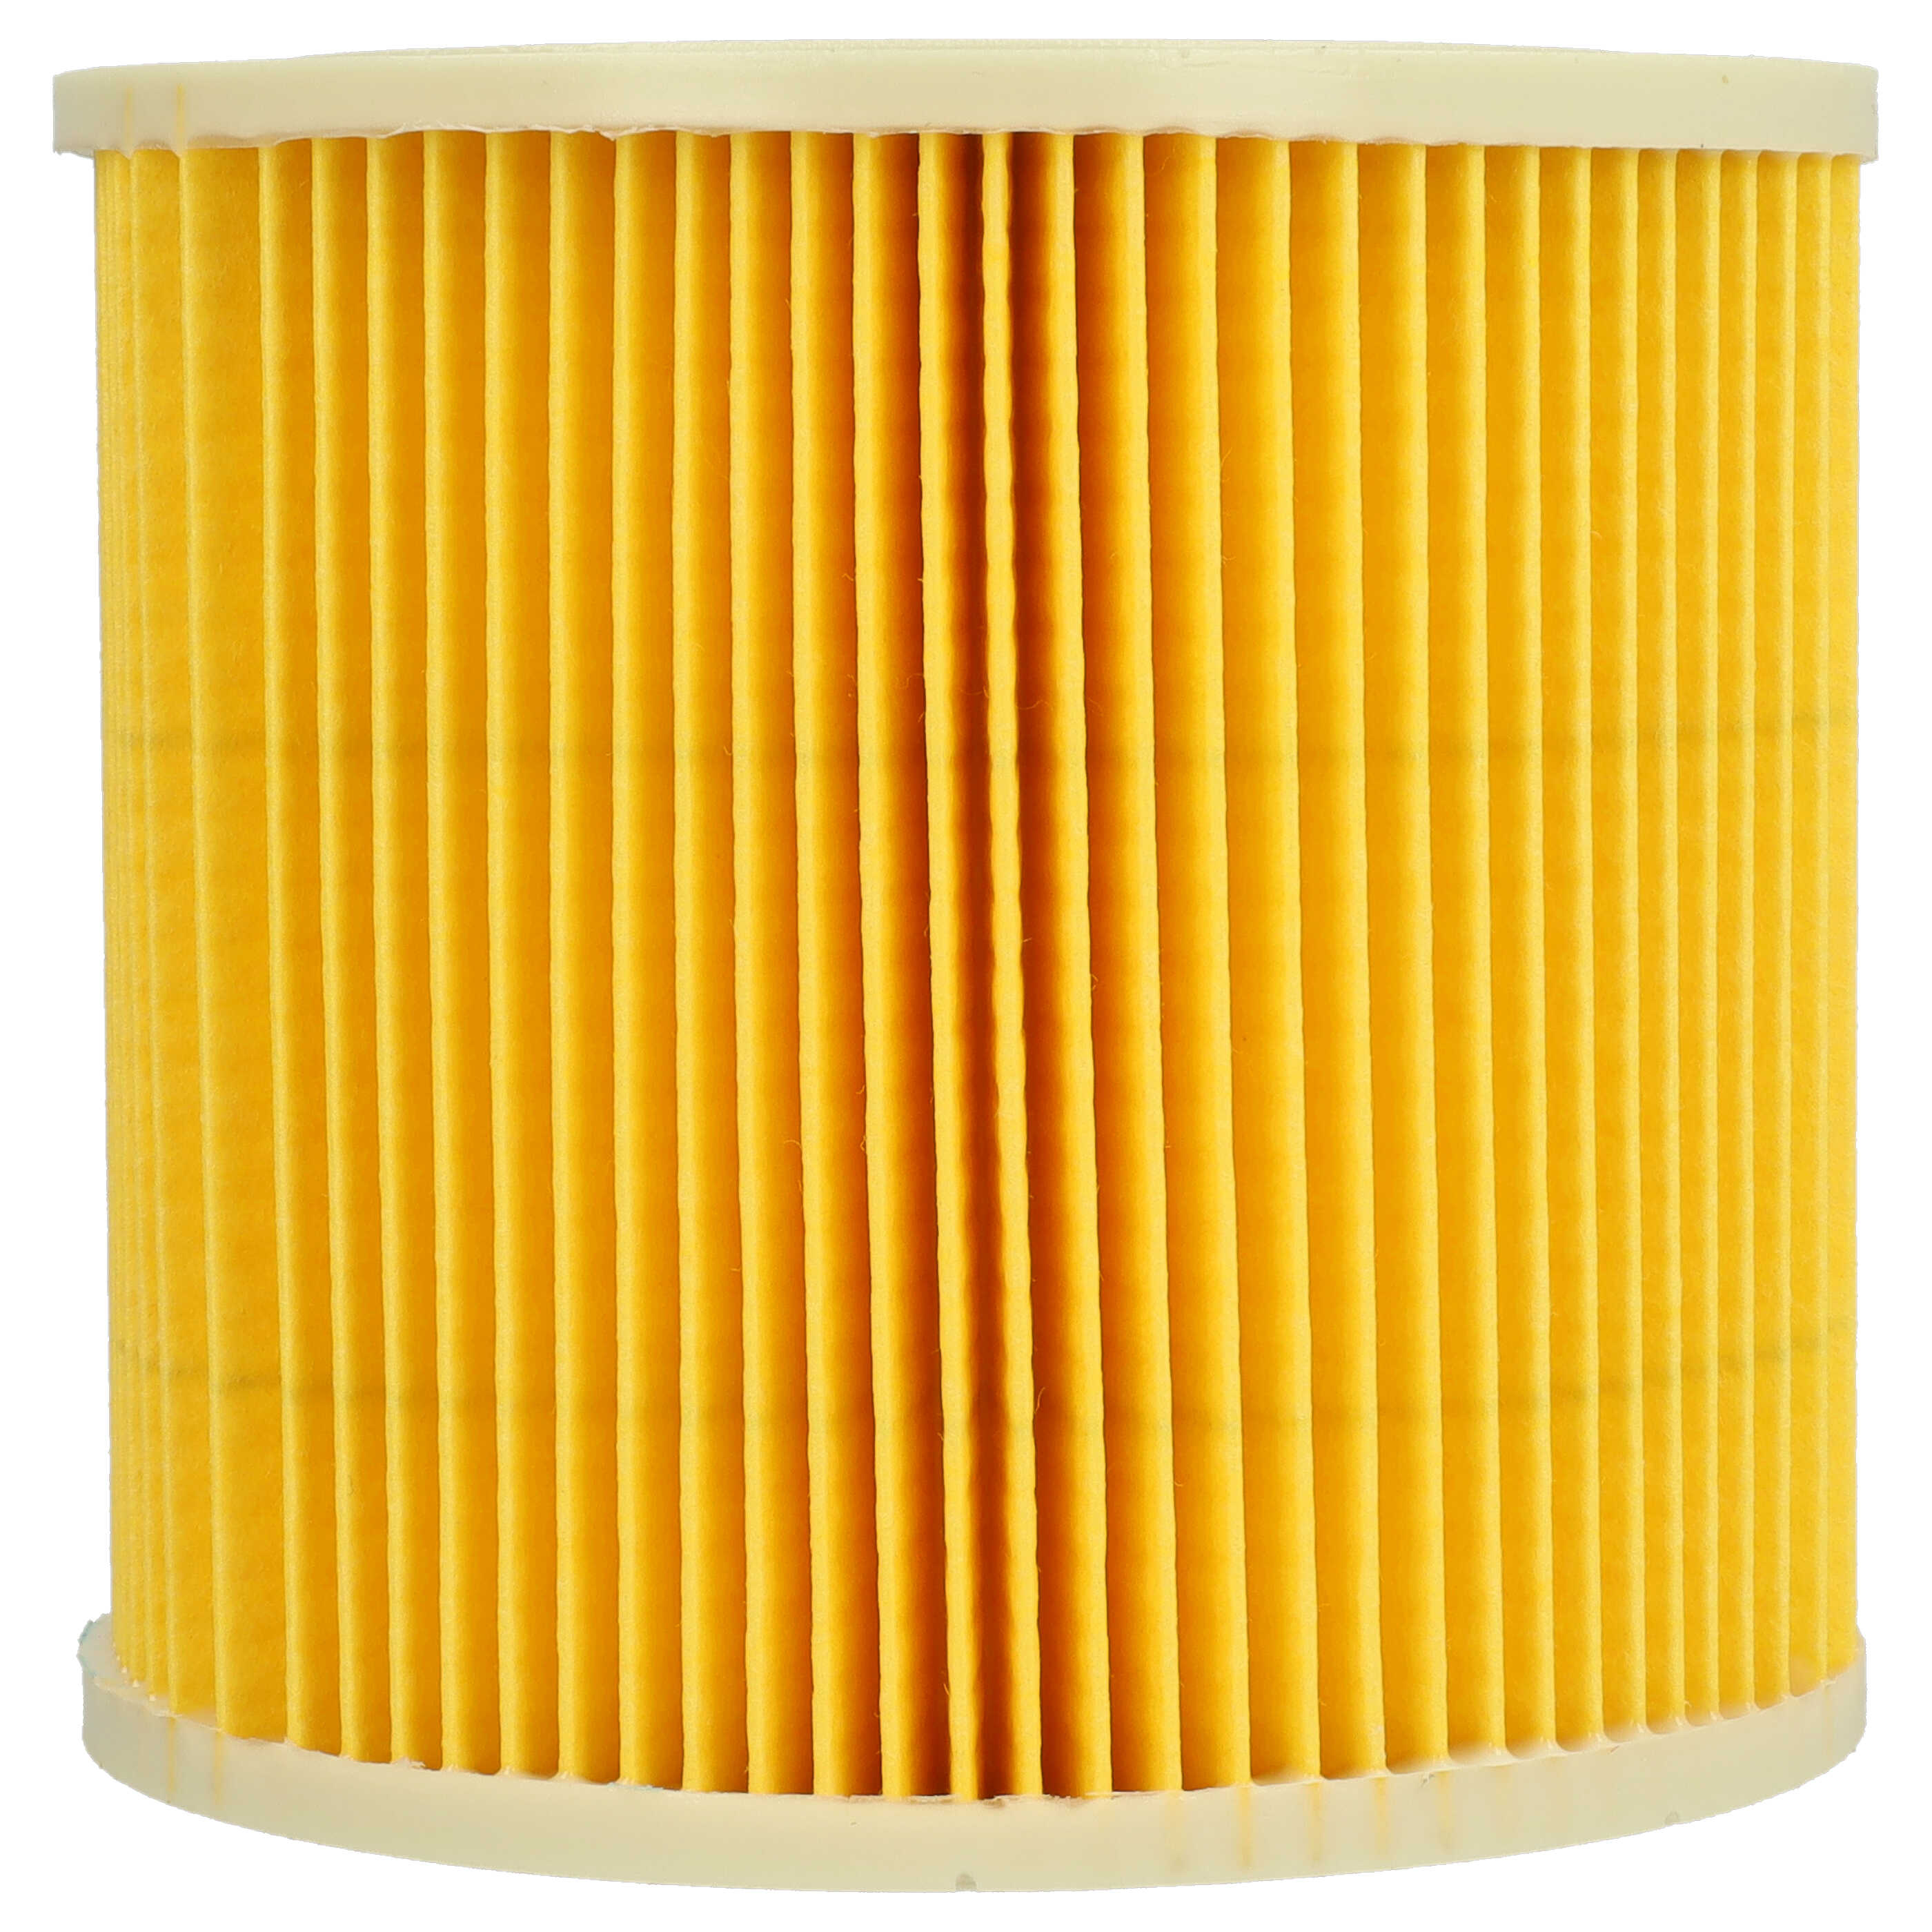 3x Filtro reemplaza Kärcher 2.863-303.0, 6.414-552.0, 6.414-547.0 para aspiradora filtro de cartucho, amarillo